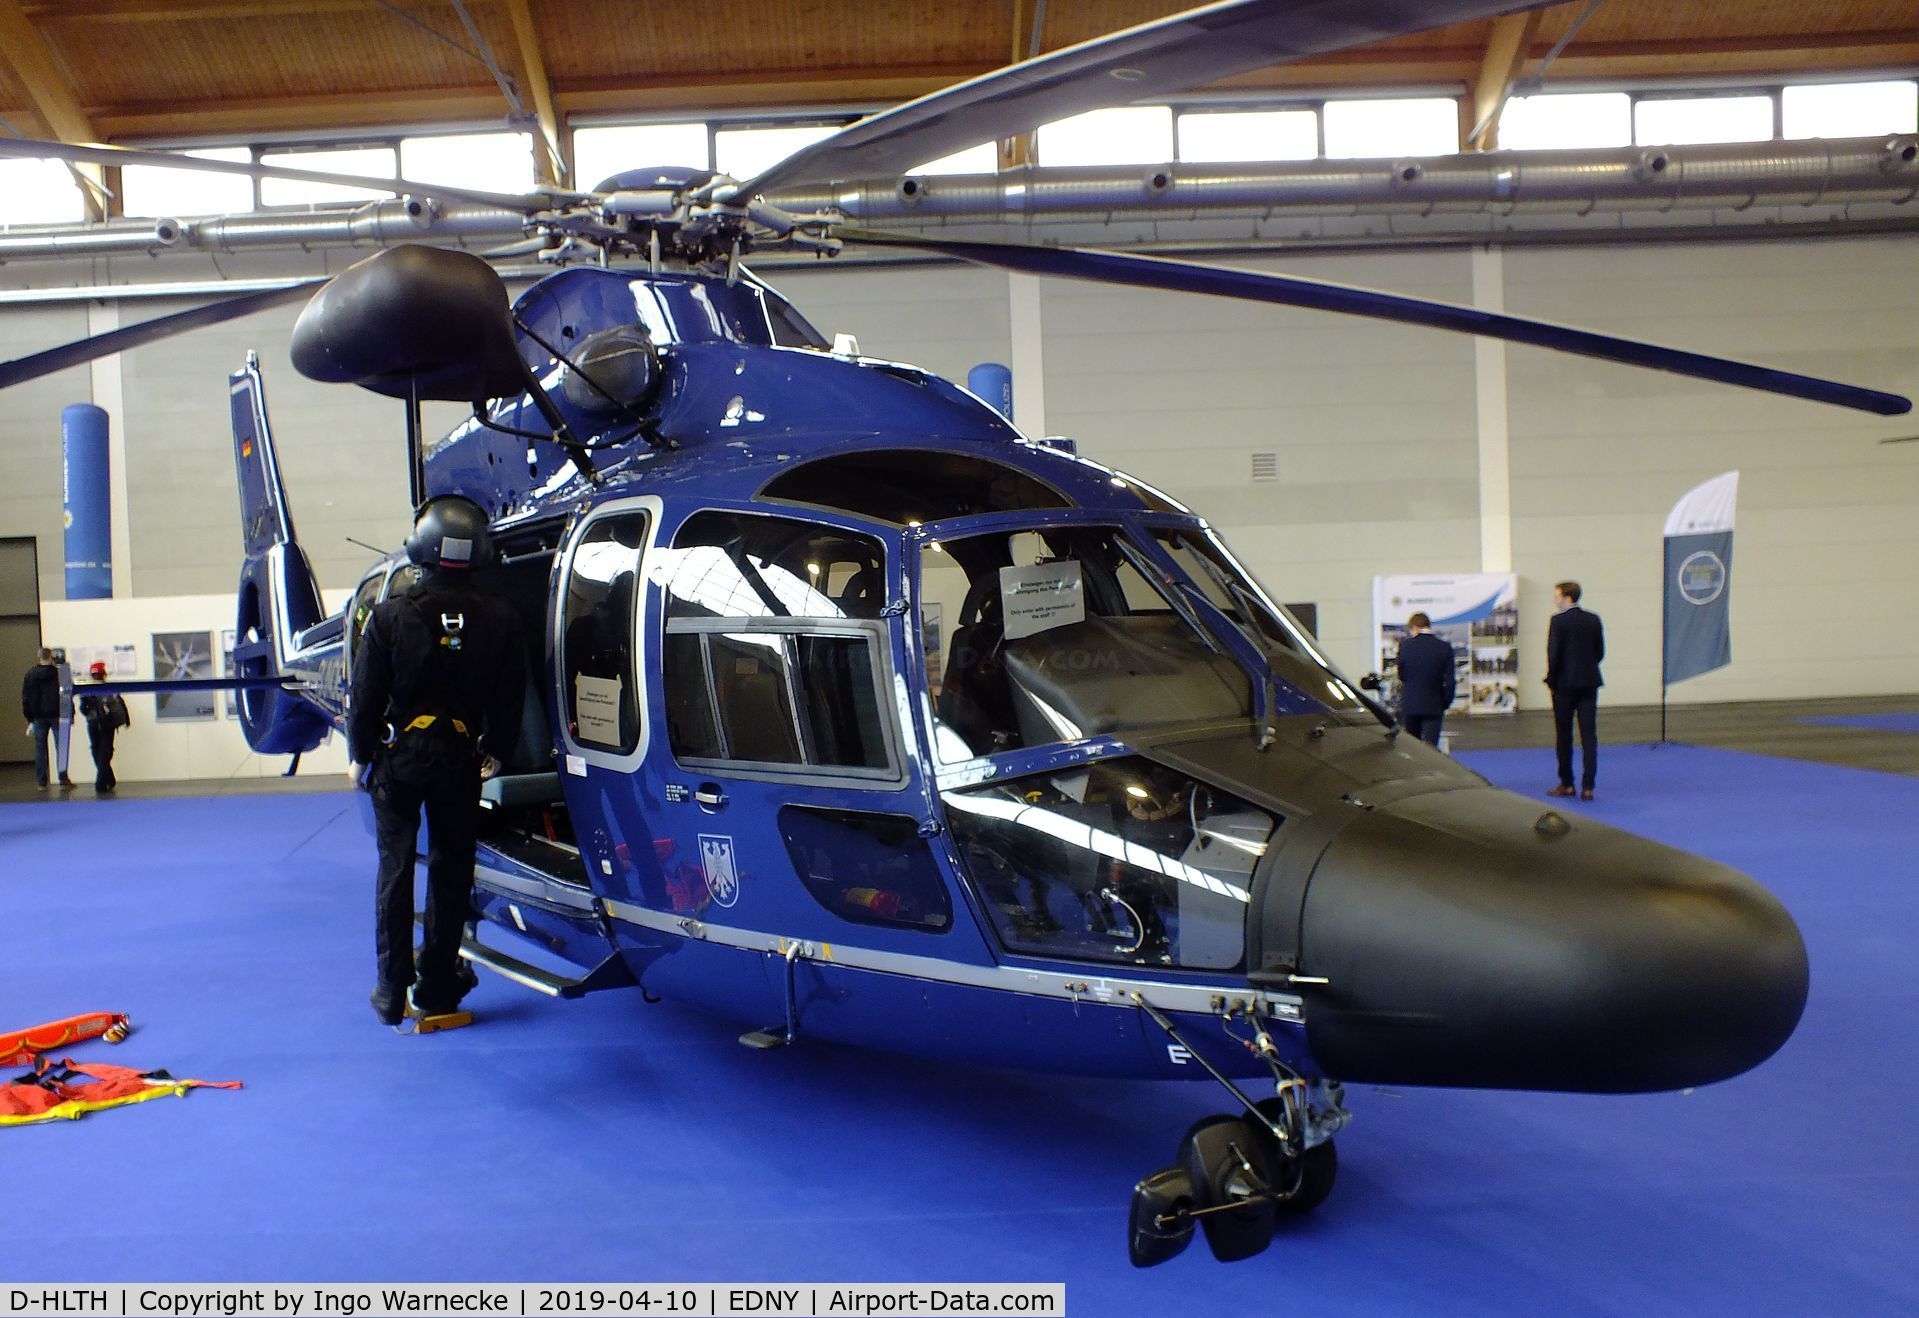 D-HLTH, Eurocopter EC-155B C/N 6544, Eurocopter EC155B of the Bundespolizei (German federal police) at the AERO 2019, Friedrichshafen